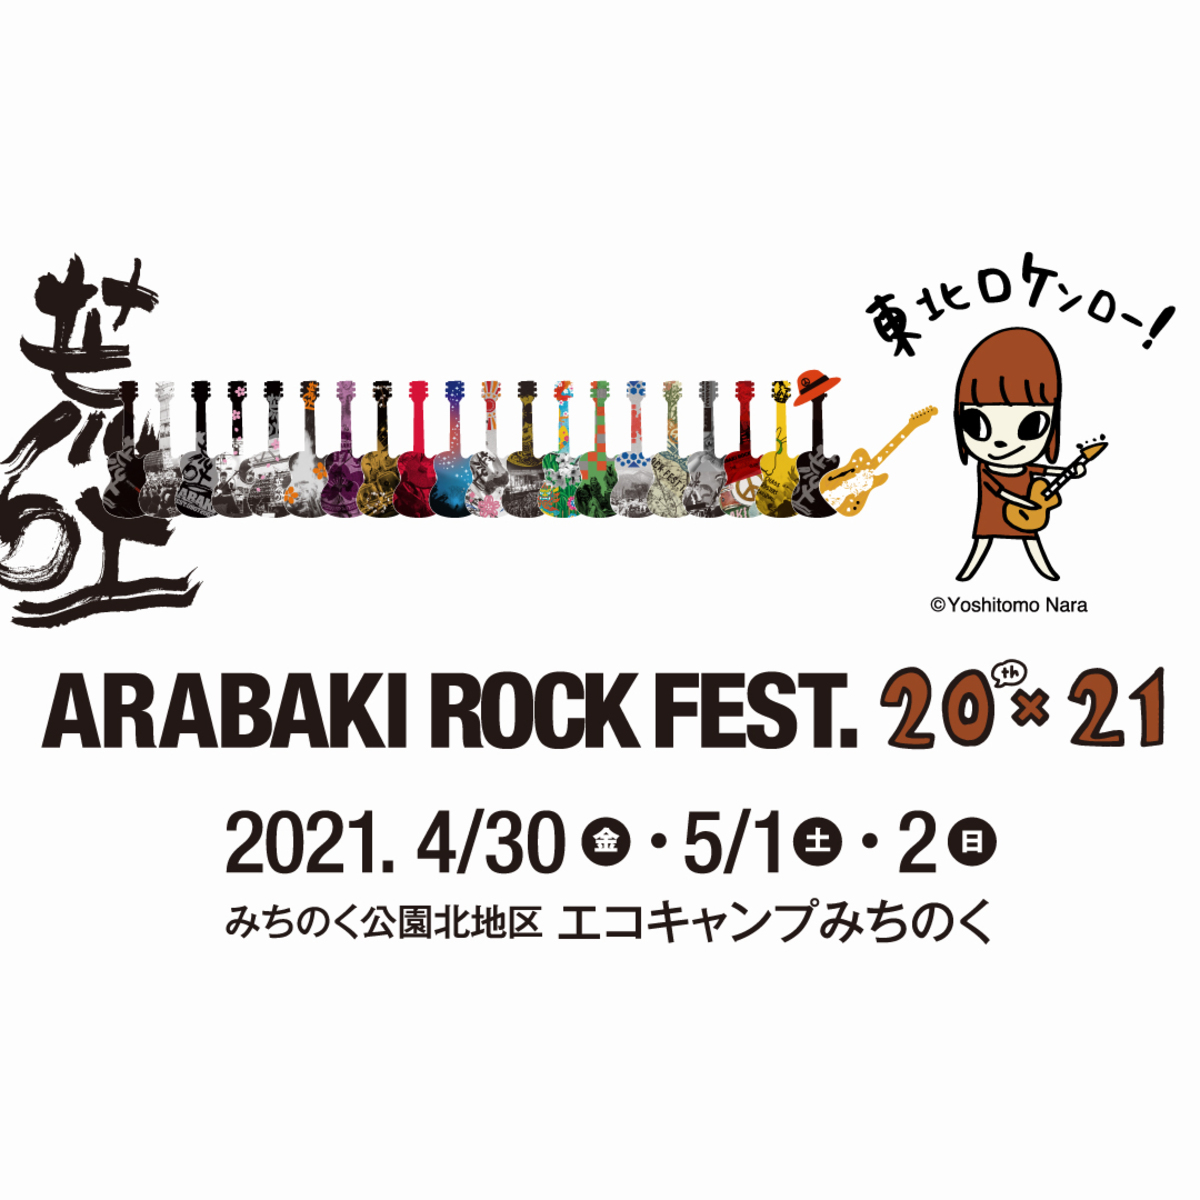 Arabaki Rock Fest th 21 出演アーティストにエルレ Ajico アジカン Shishamo Creepy Nuts テナー バクホン 9mm The Pillows 藤井 風ら36組